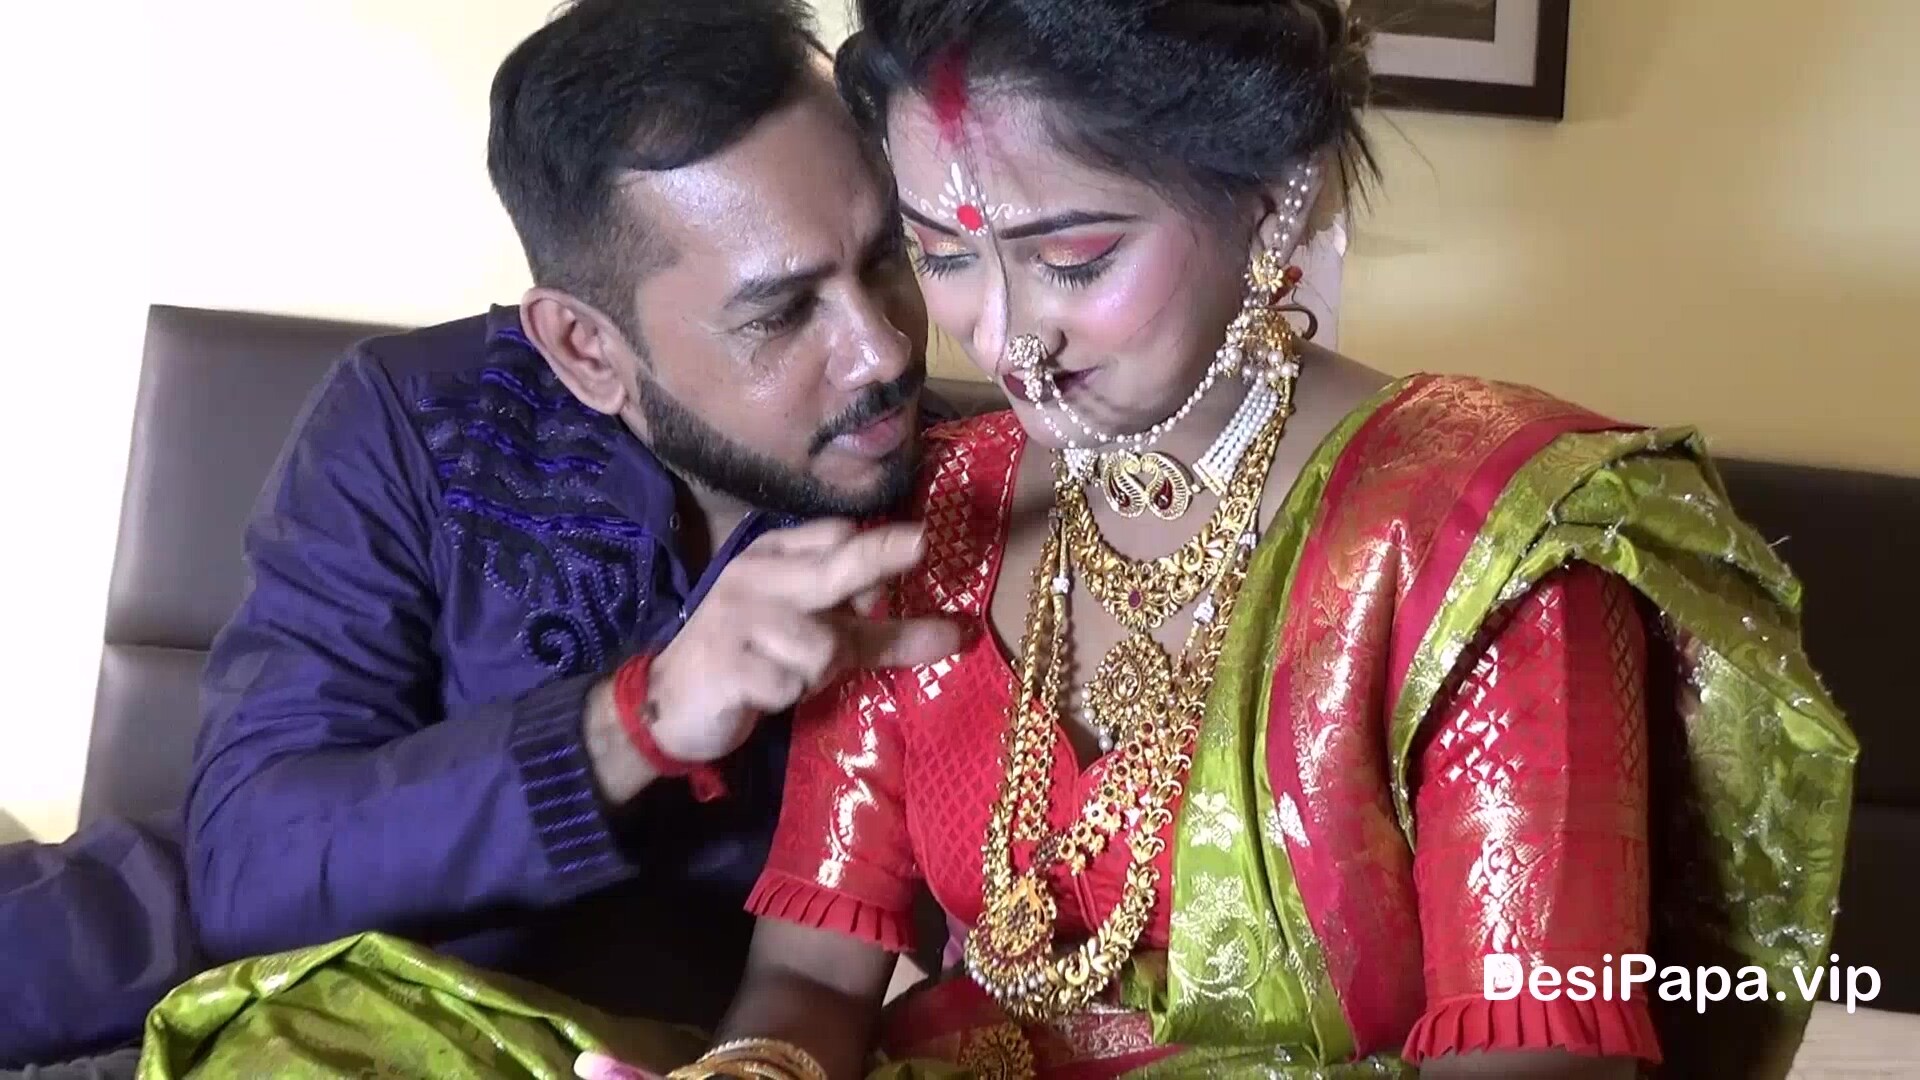 Newly Married Indian Girl Sudipa Hardcore Honeymoon First night sex and creampie - Hindi Audio pic